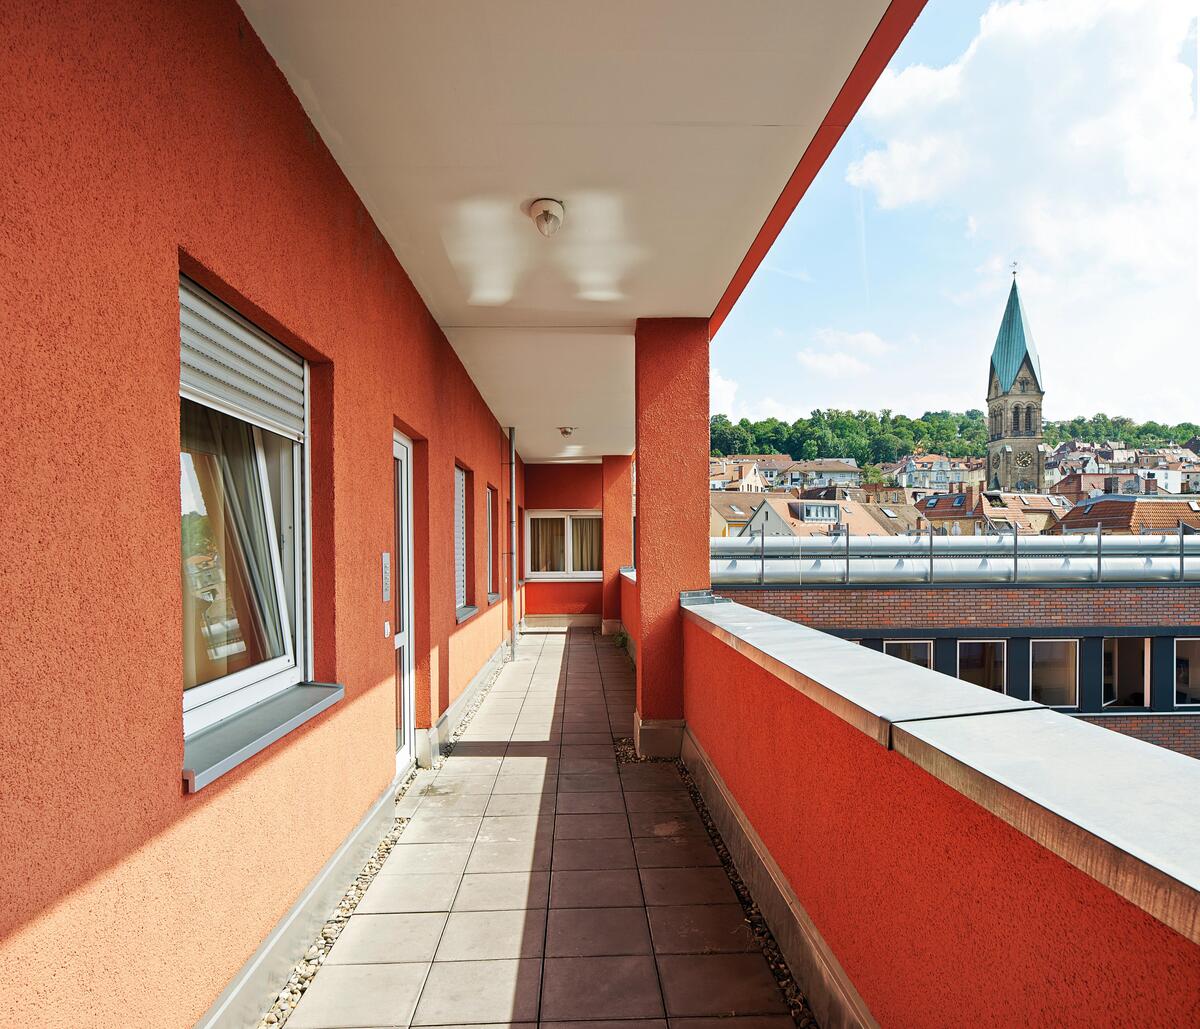 Balcony of the dormitory at Heilmannstraße 4